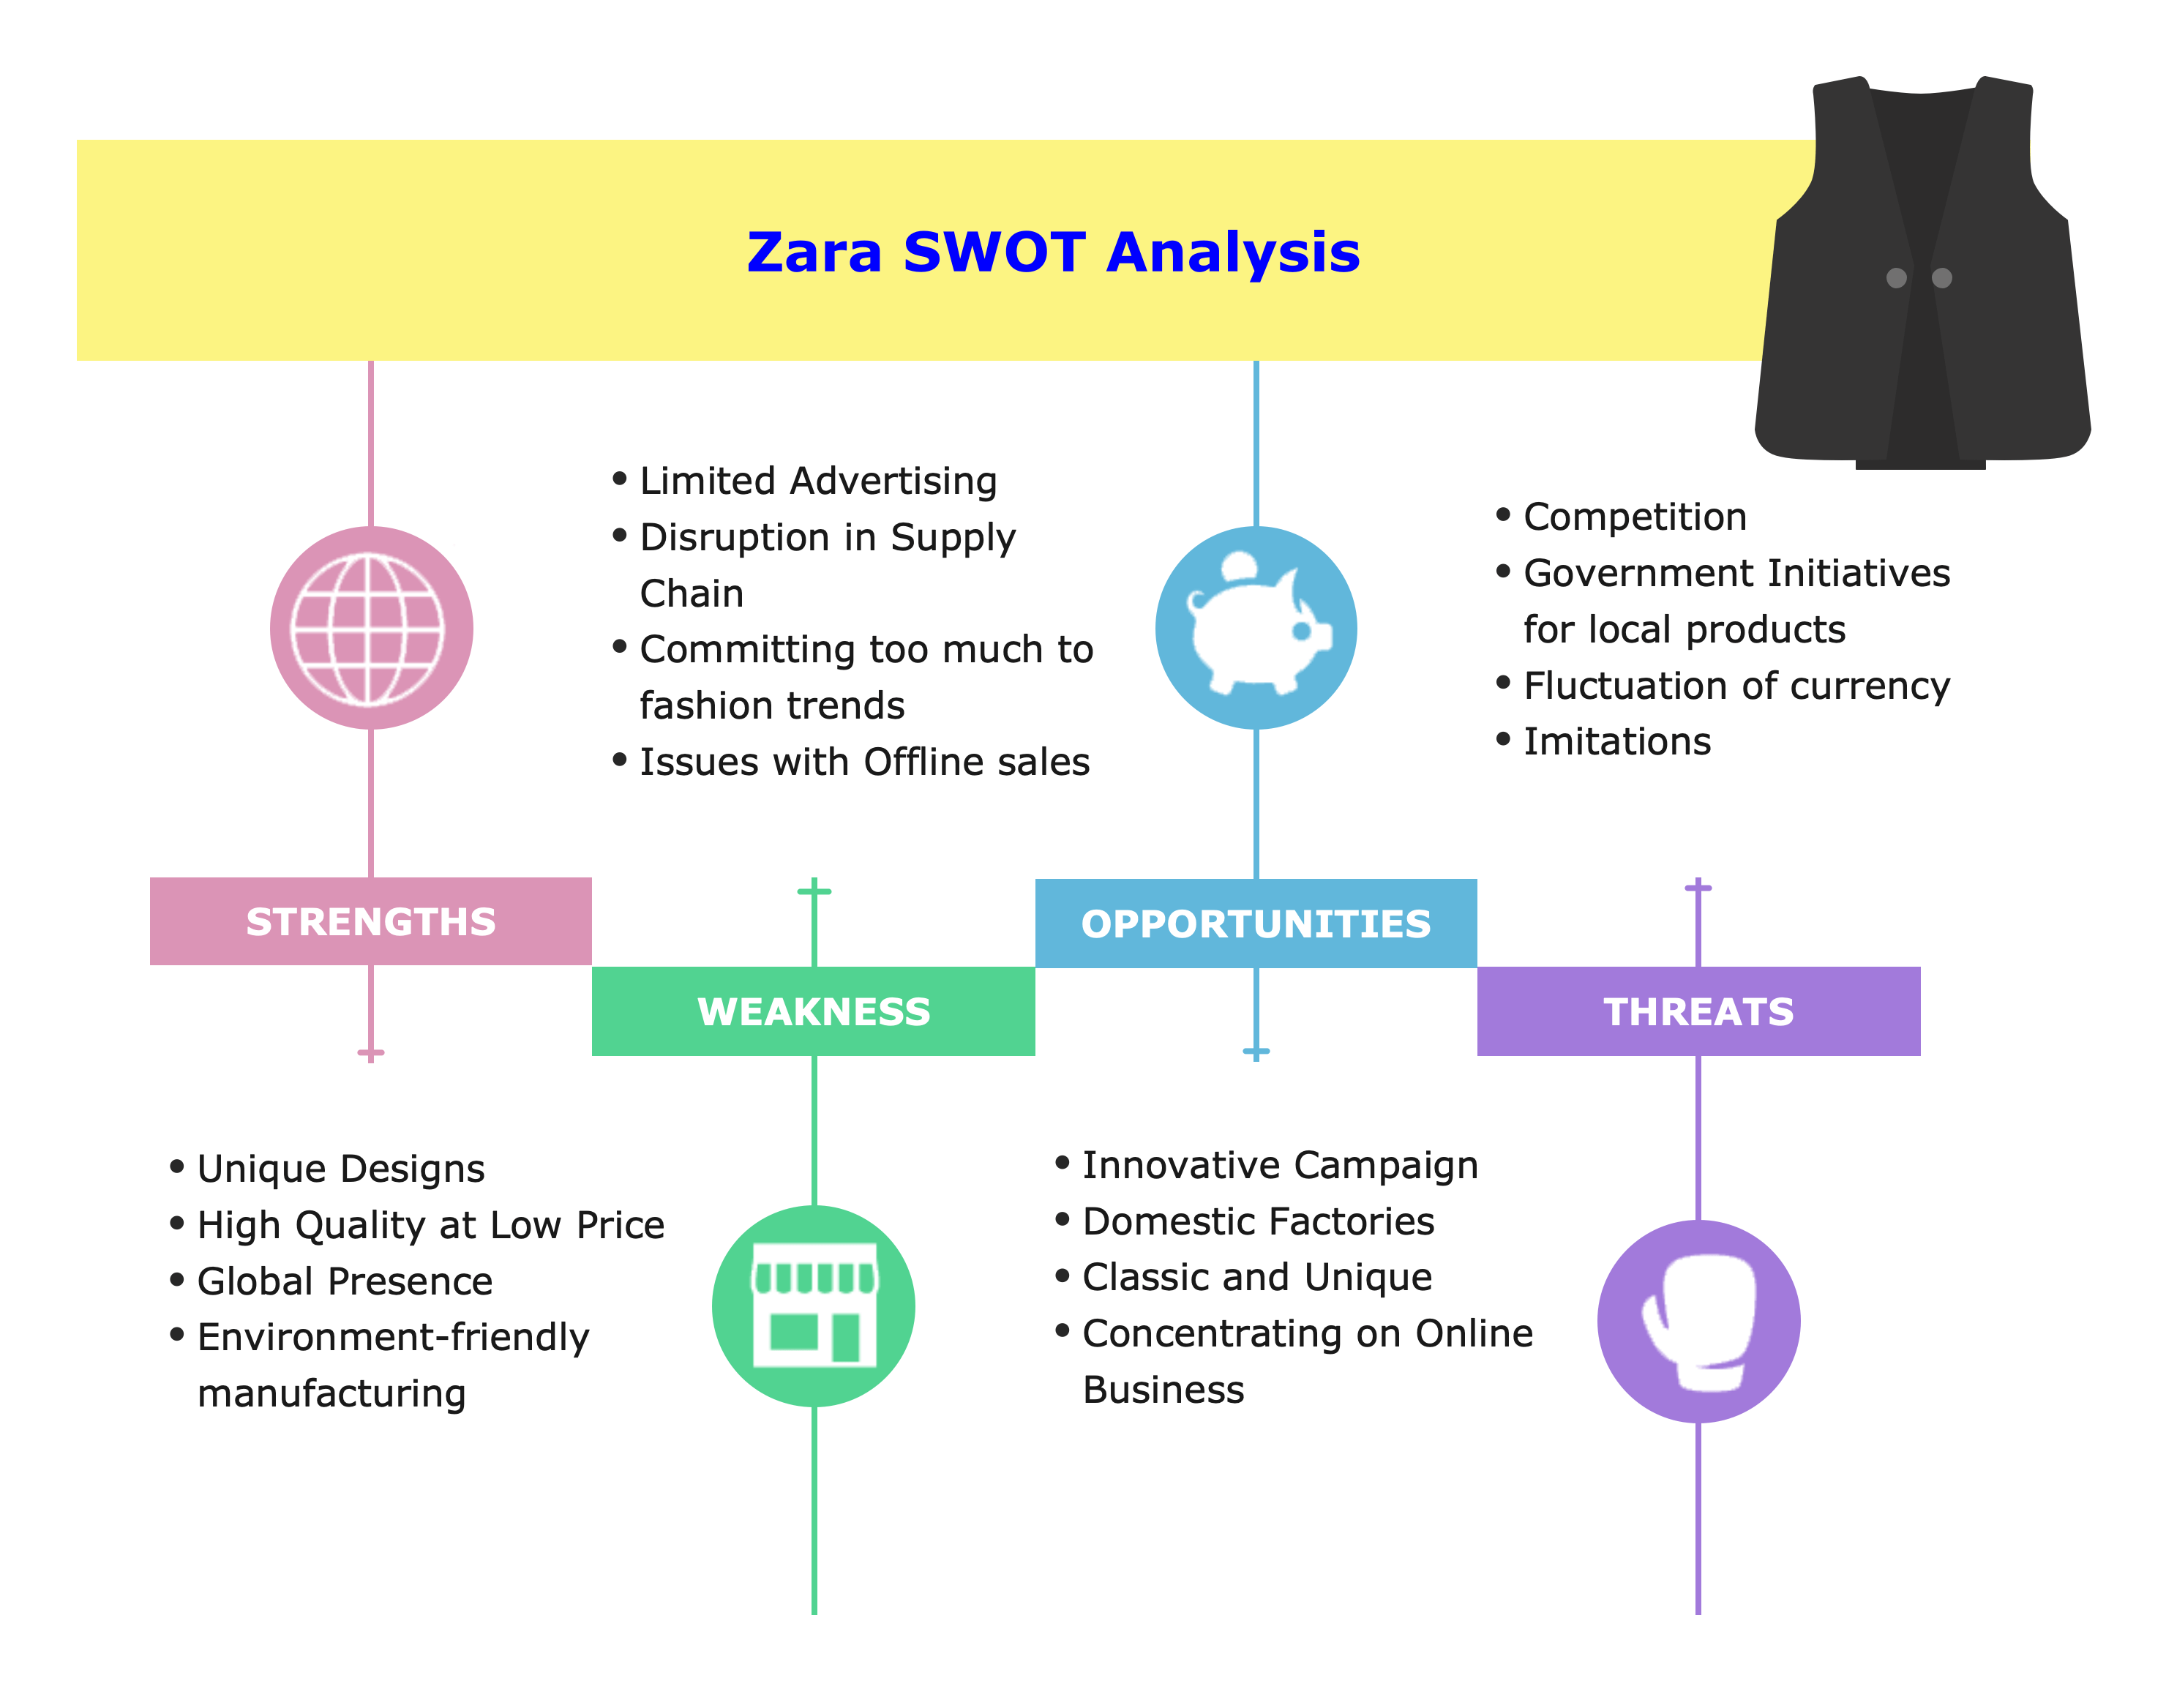 Zara SWOT analysis diagram